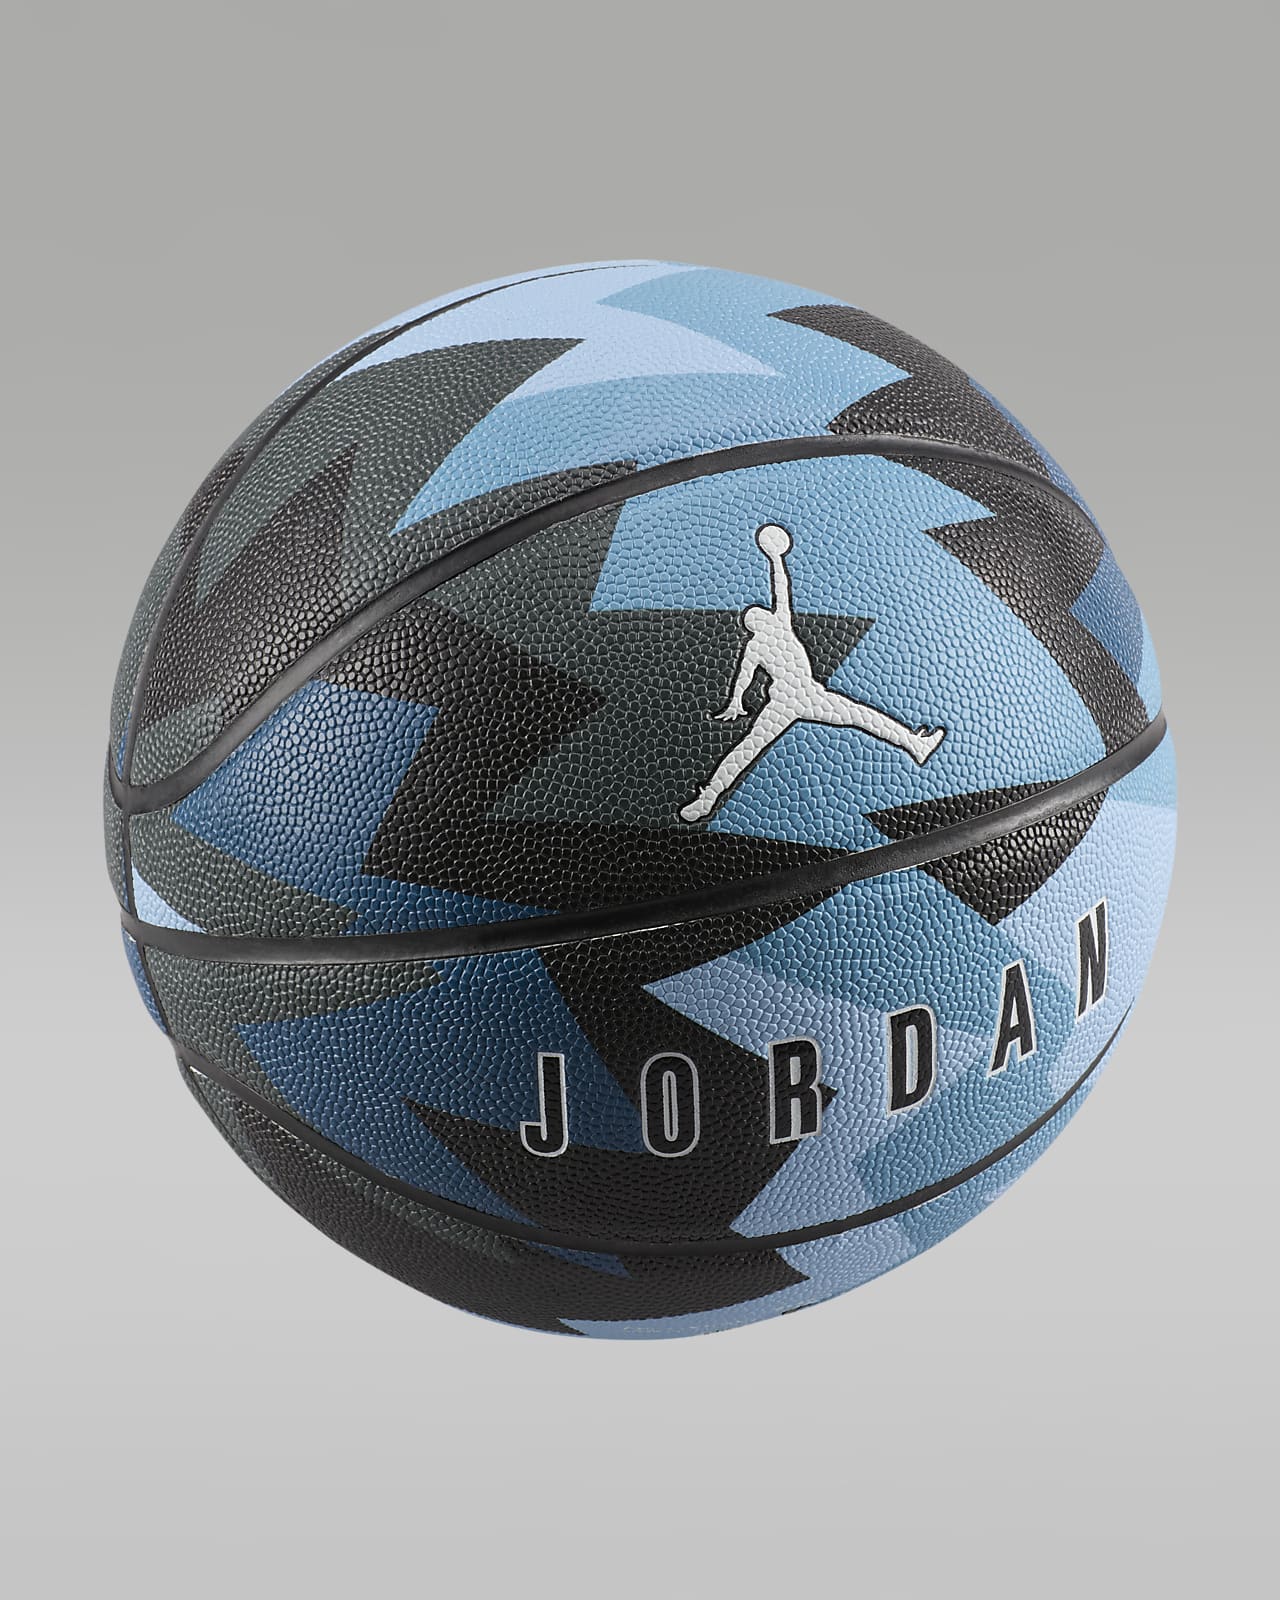 Bola de basquetebol Jordan 8P (vazia)